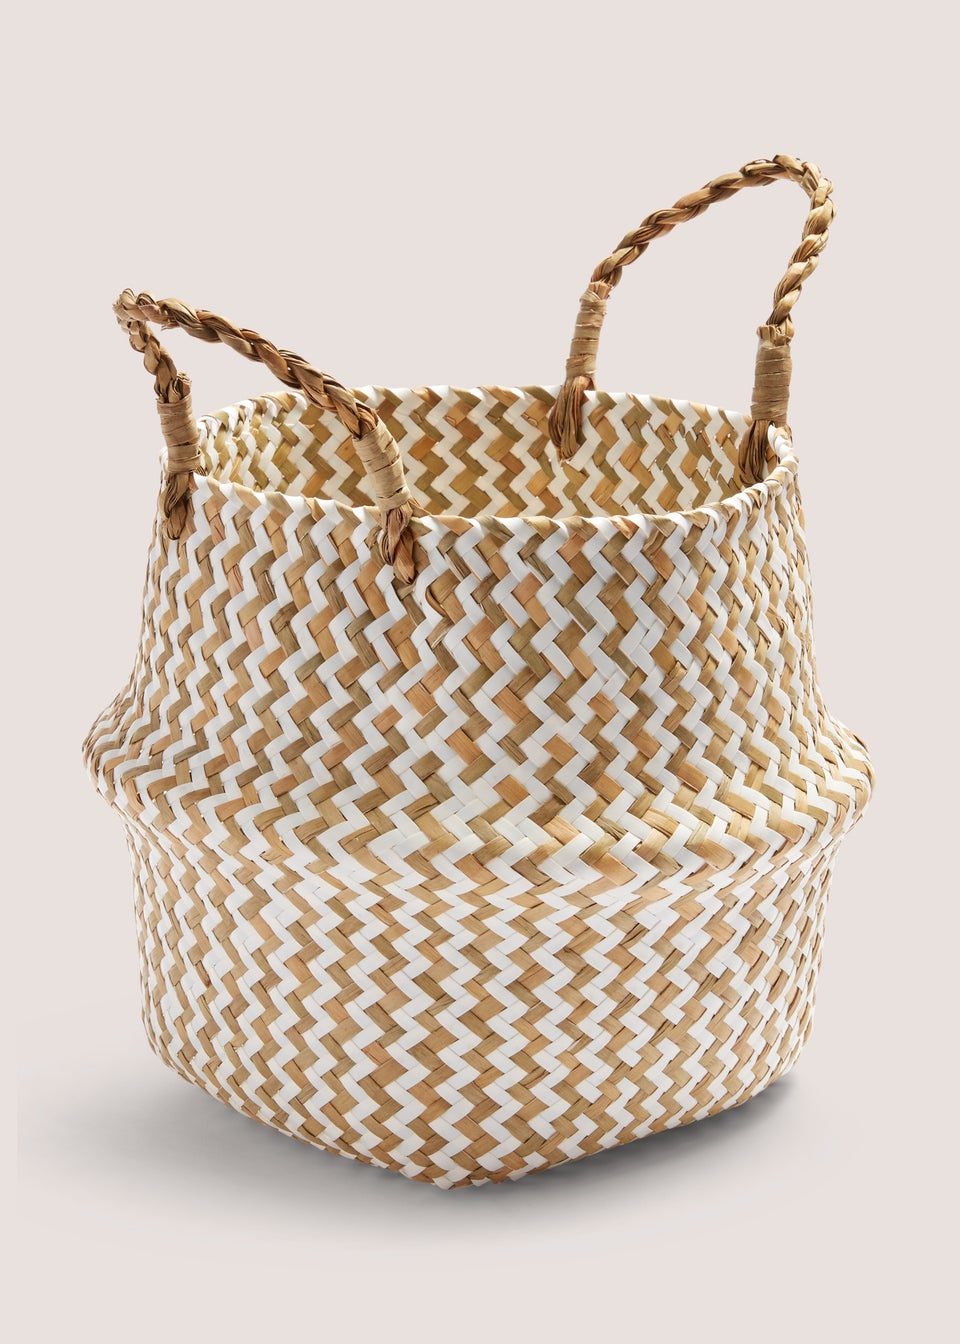 Belly Cabana Basket (25cm x 30cm x 30cm)